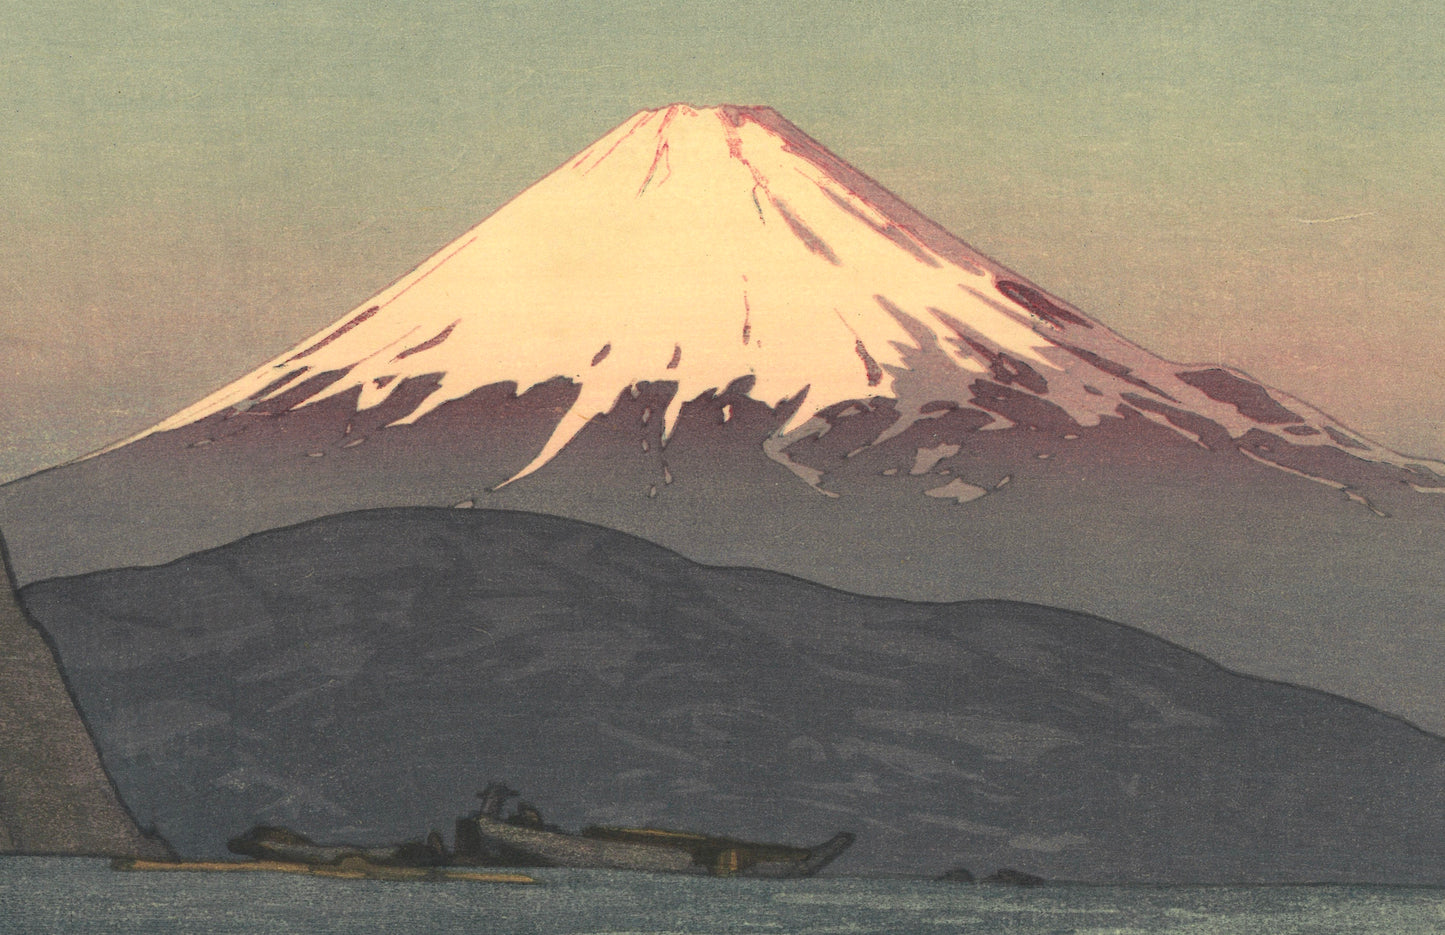 Hiroshi Yoshida Giclée Woodblock Print "Fuji Yama from Okitsu" 1928 10"x15"